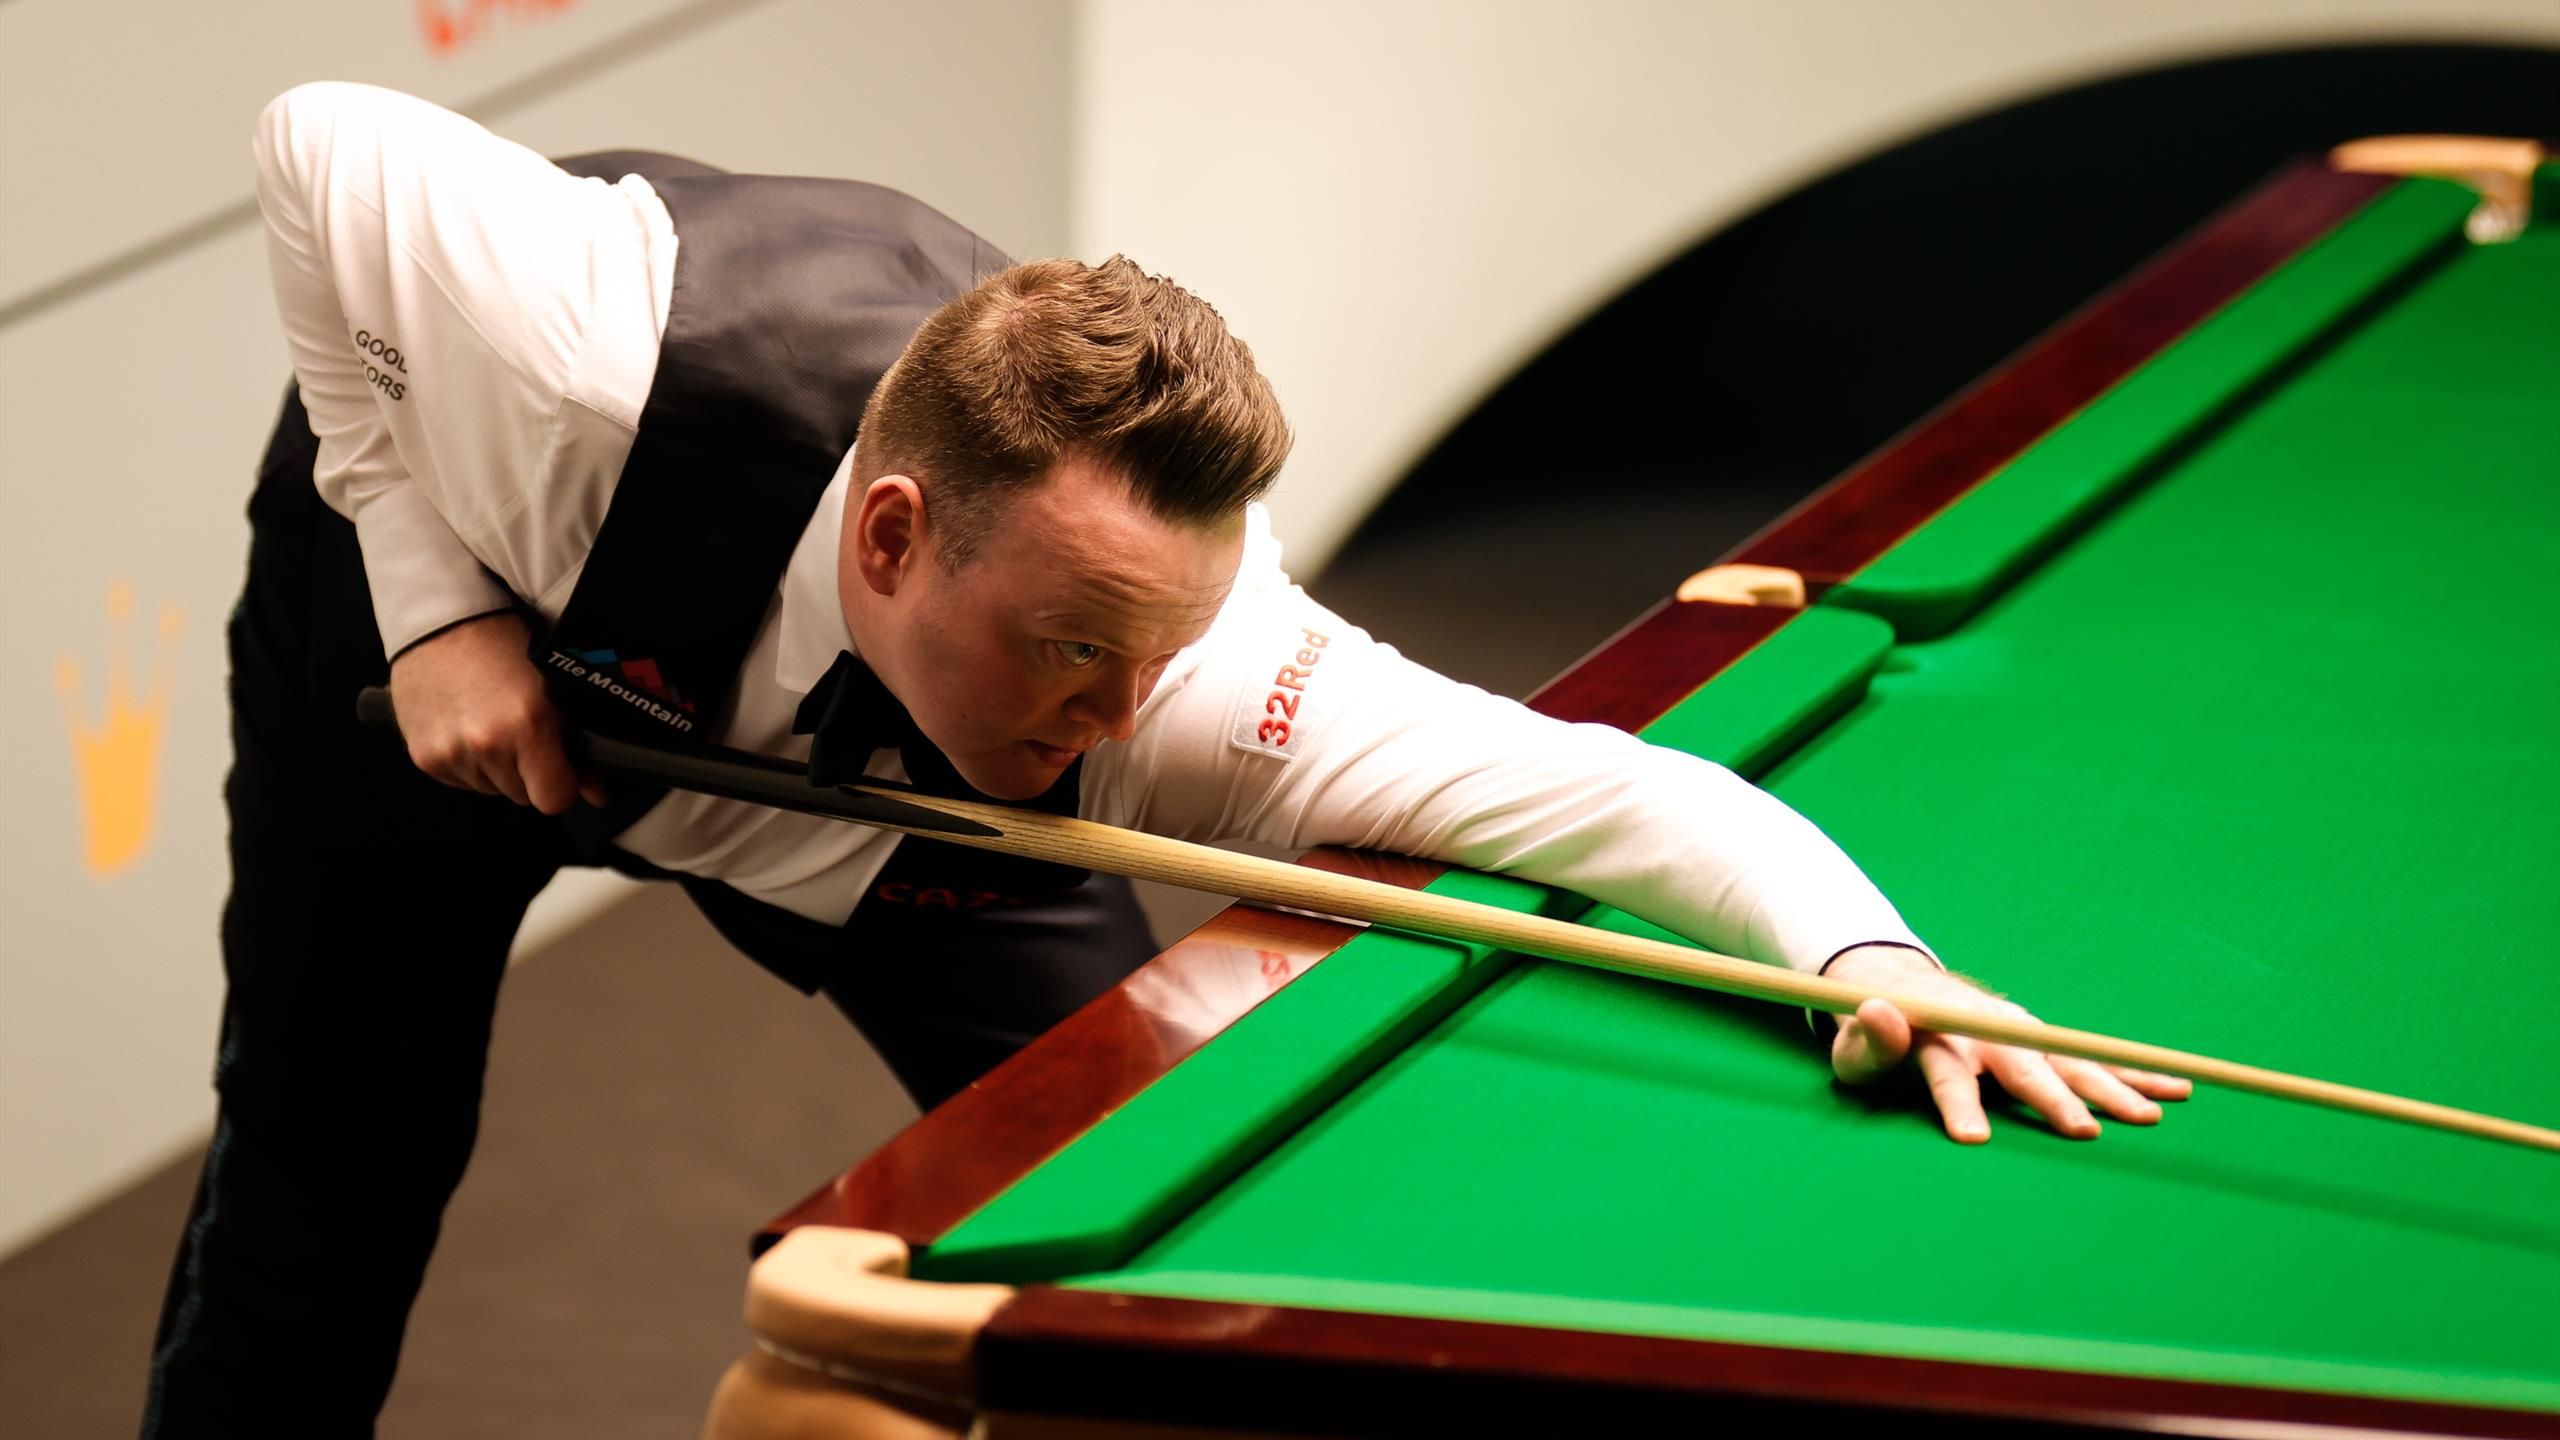 European Masters 2023 Shaun Murphy breezes past Daniel Wells, John Higgins through to last 16 with 5-2 win